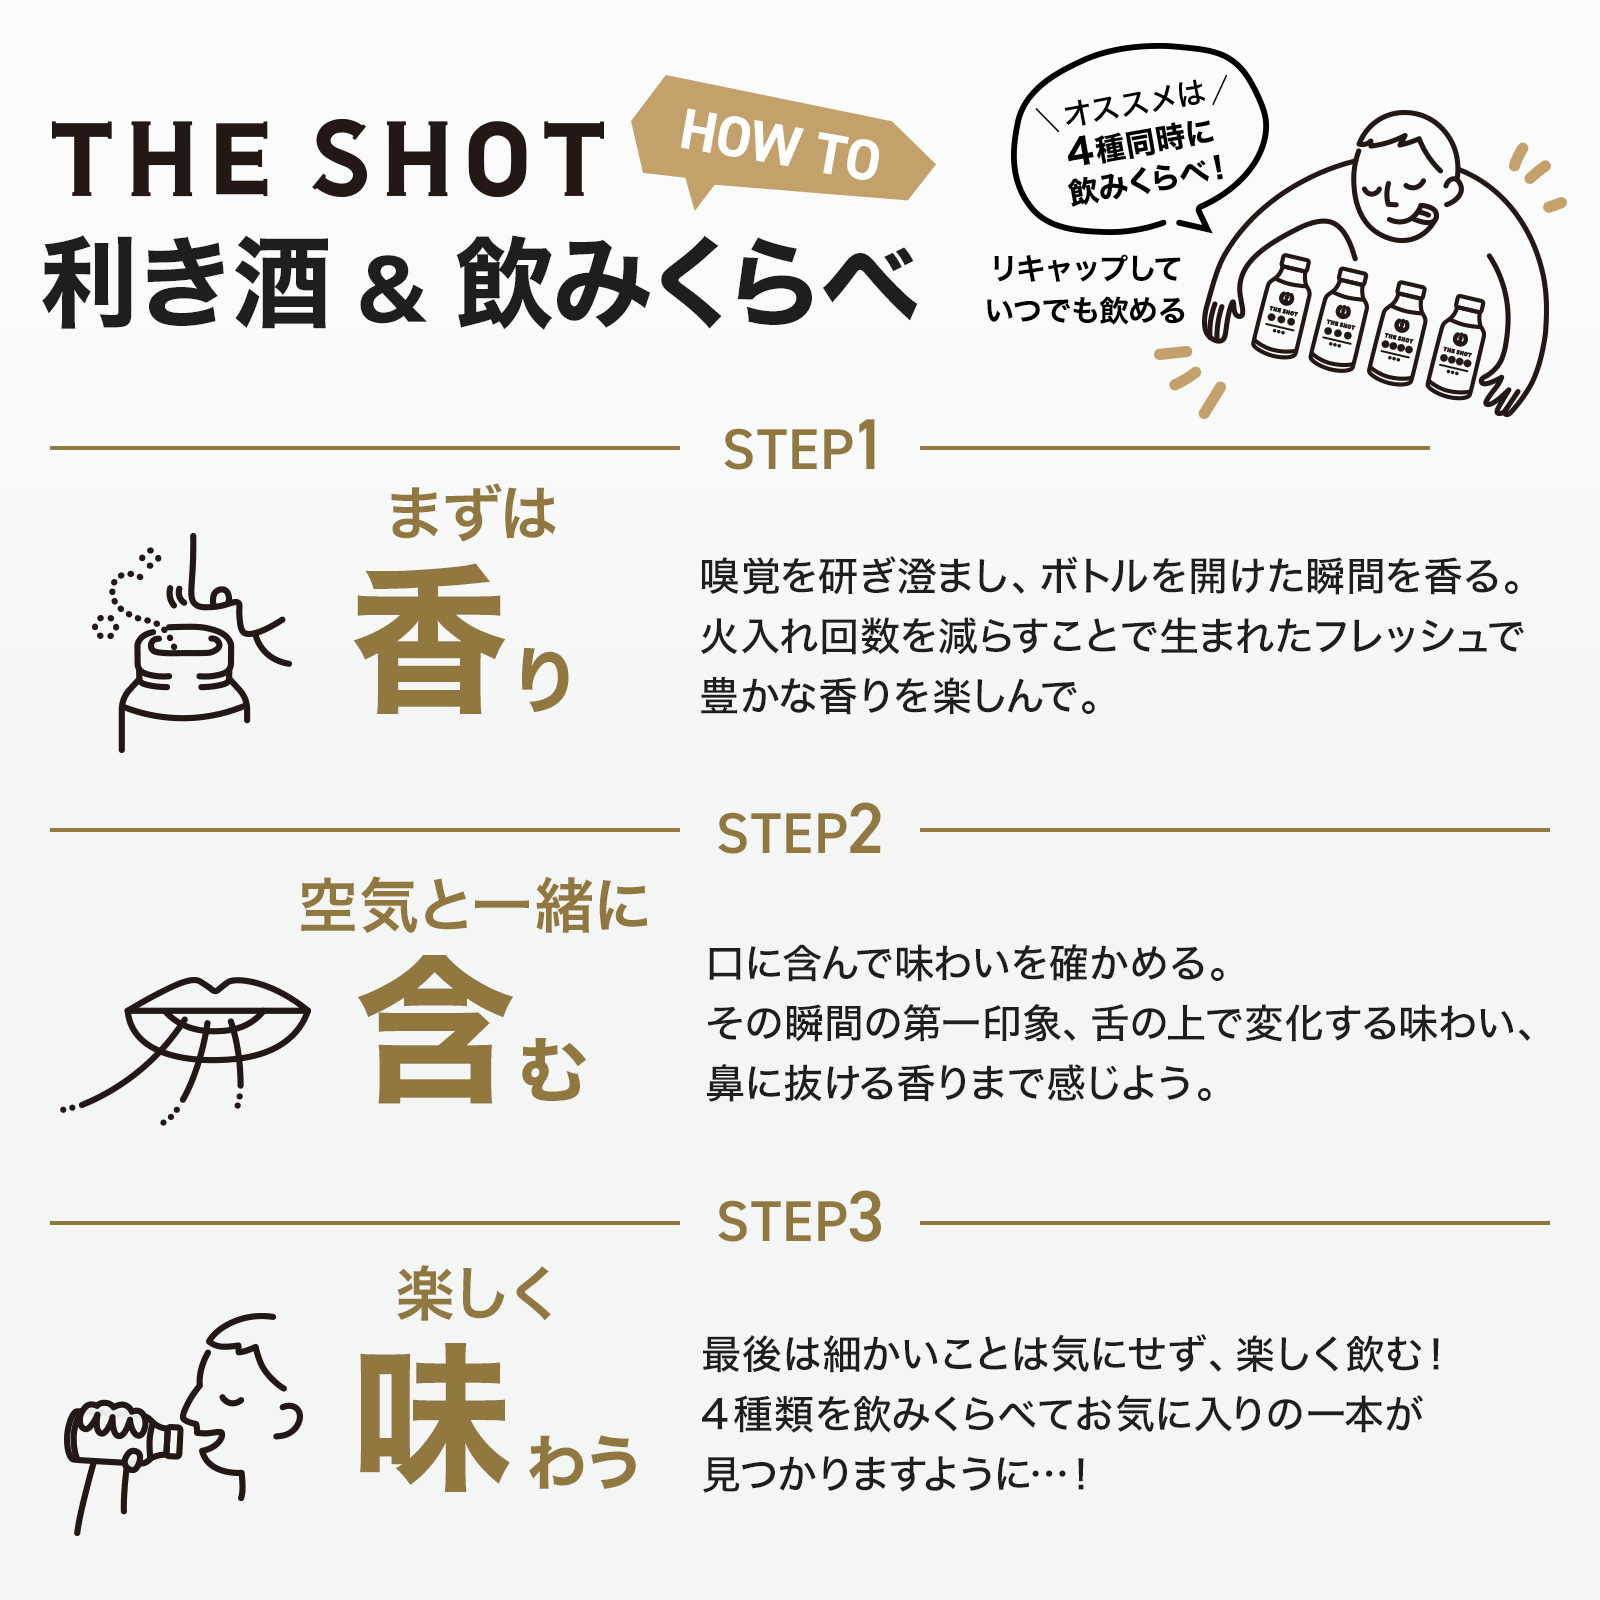 THE SHOT【大吟醸・本醸造・純米吟醸・上撰生詰】